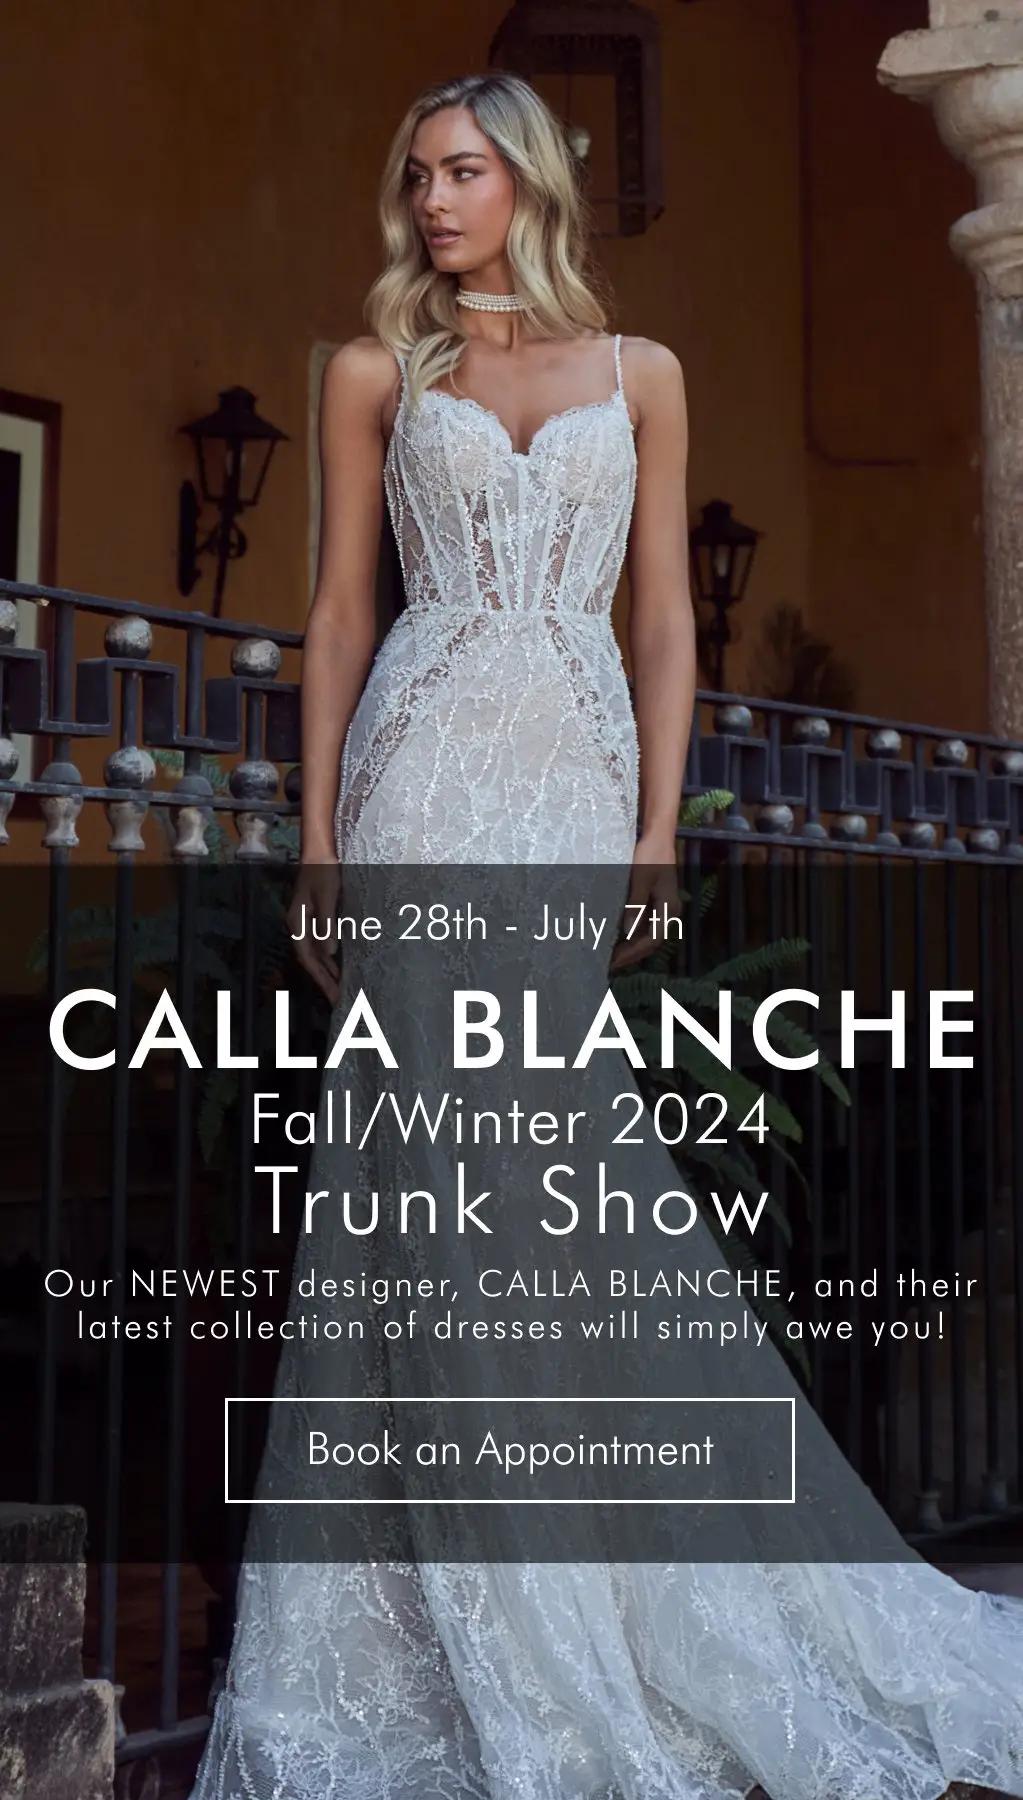 Mobile Calla Blanche Fall/Winter 2024 Trunk Show Banner